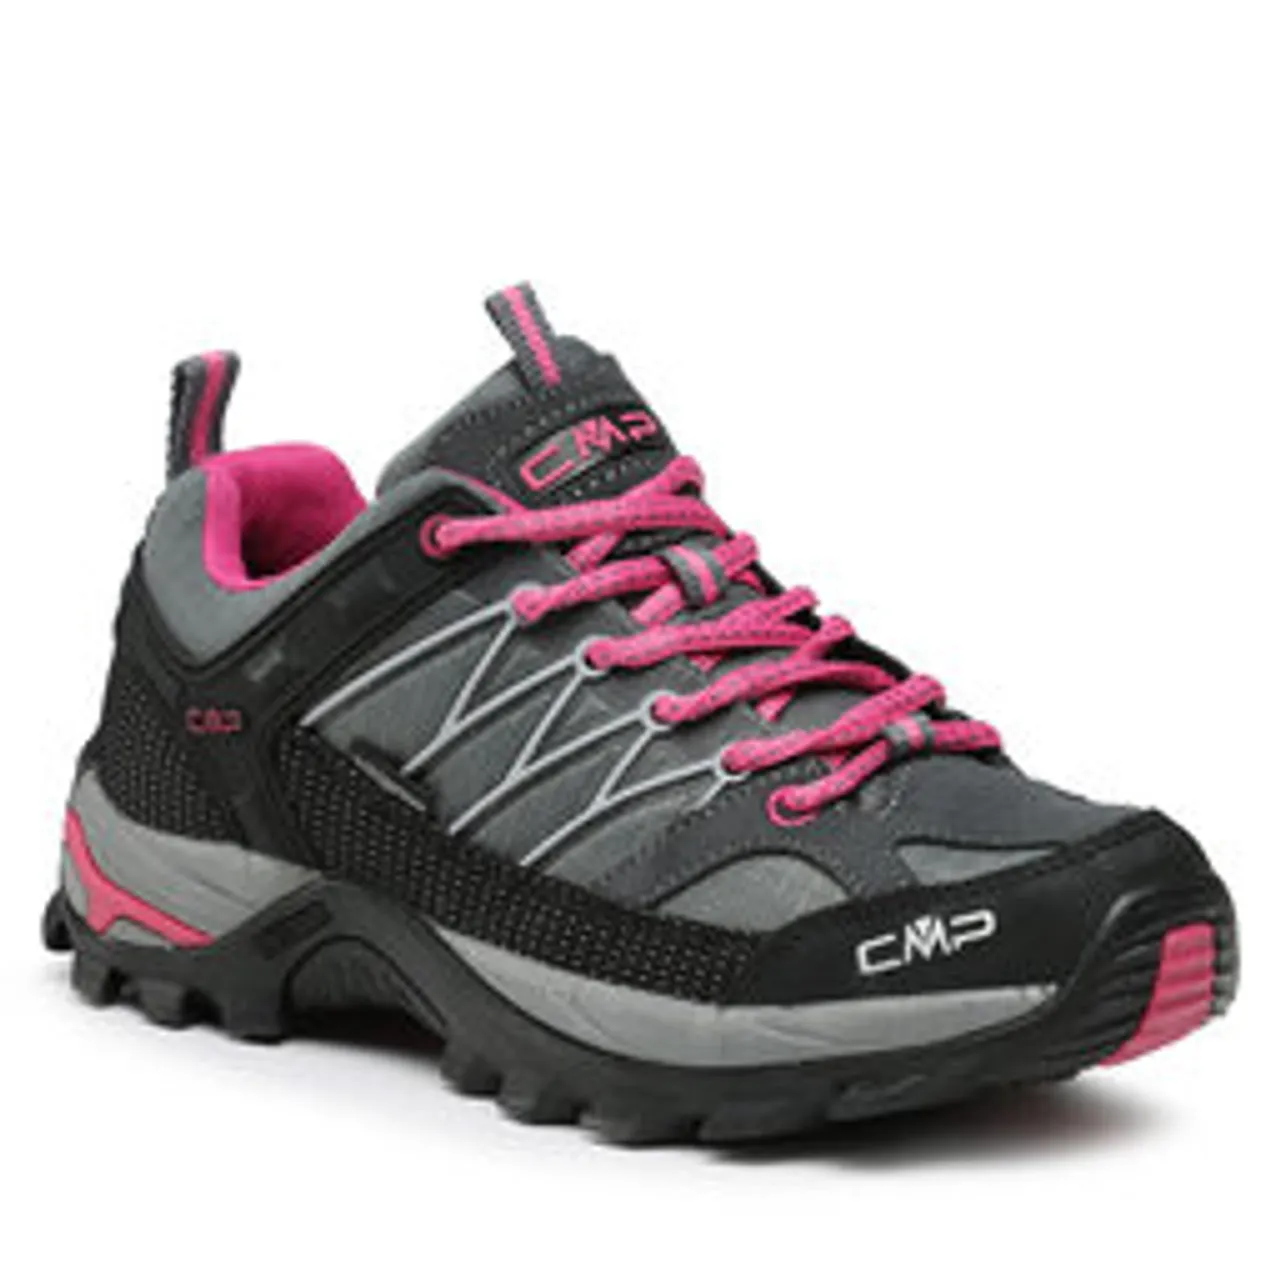 Trekkingschuhe CMP Rigel Low Trekking Shoes Wp 3Q54456 Grey/Fuxia/Ice 103Q